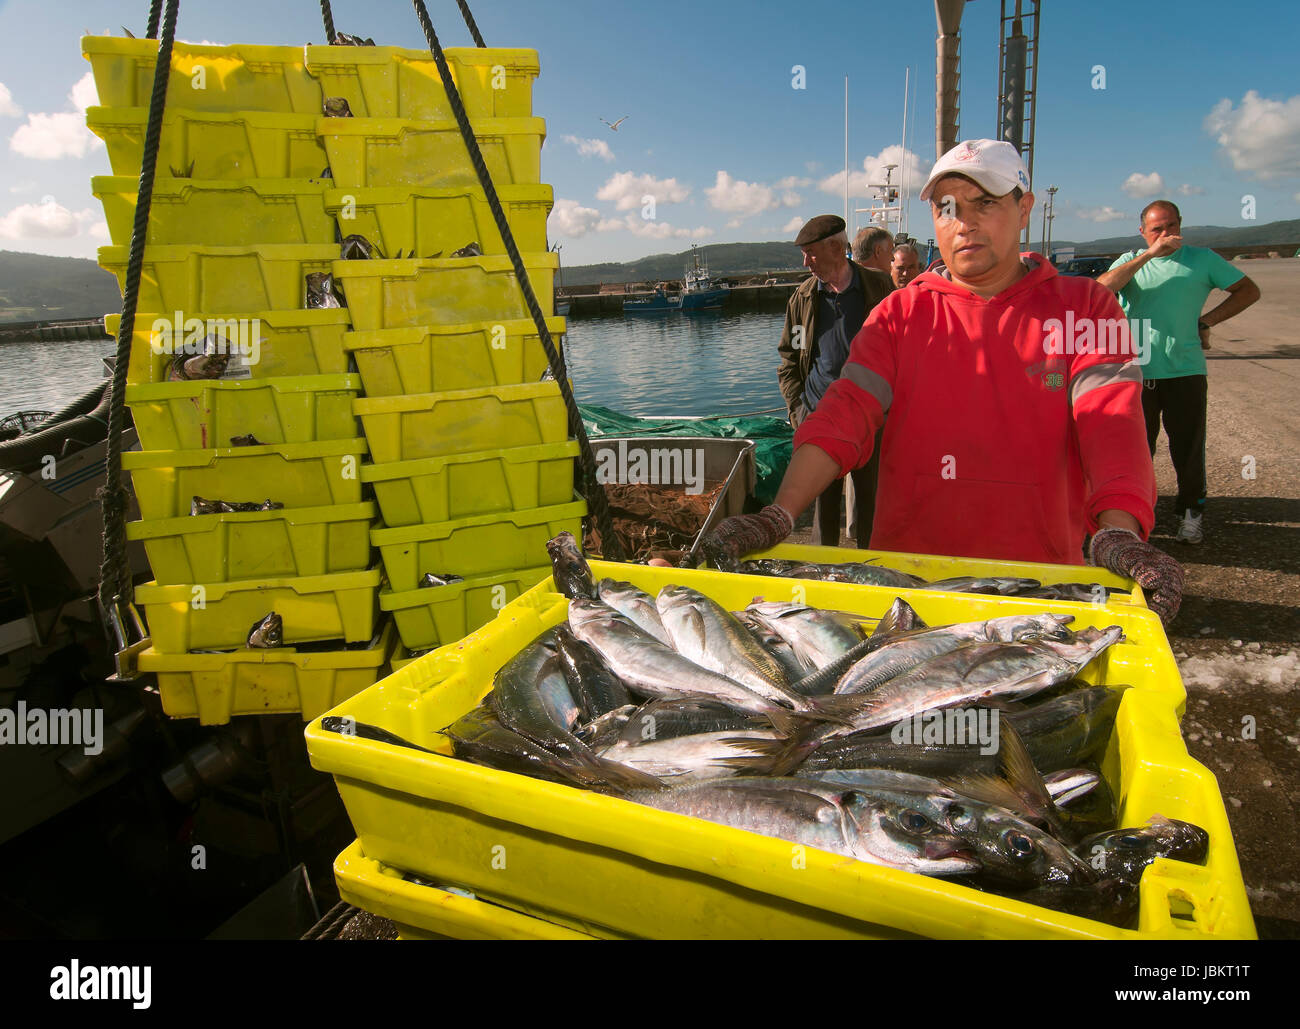 Fishing boat unloading, Camarinas, La Coruna province, Region of Galicia, Spain, Europe Stock Photo